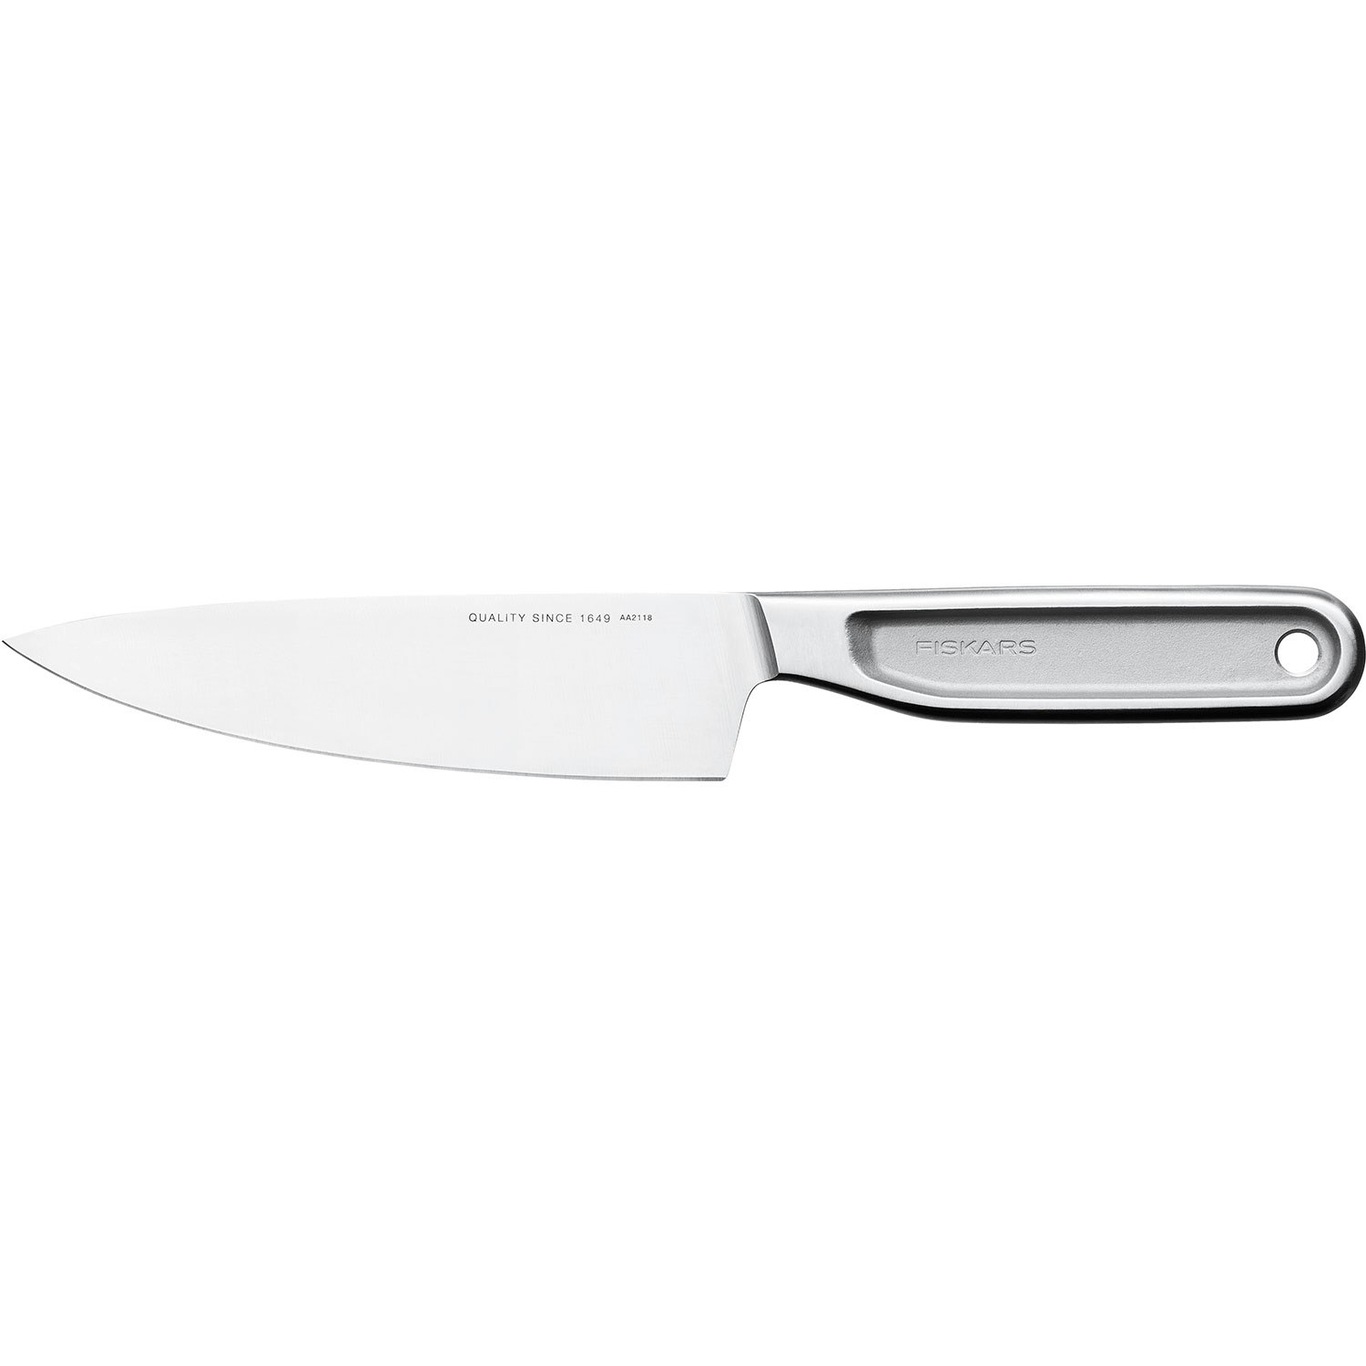 https://royaldesign.com/image/2/fiskars-all-steel-cook-knife-135-cm-0?w=800&quality=80